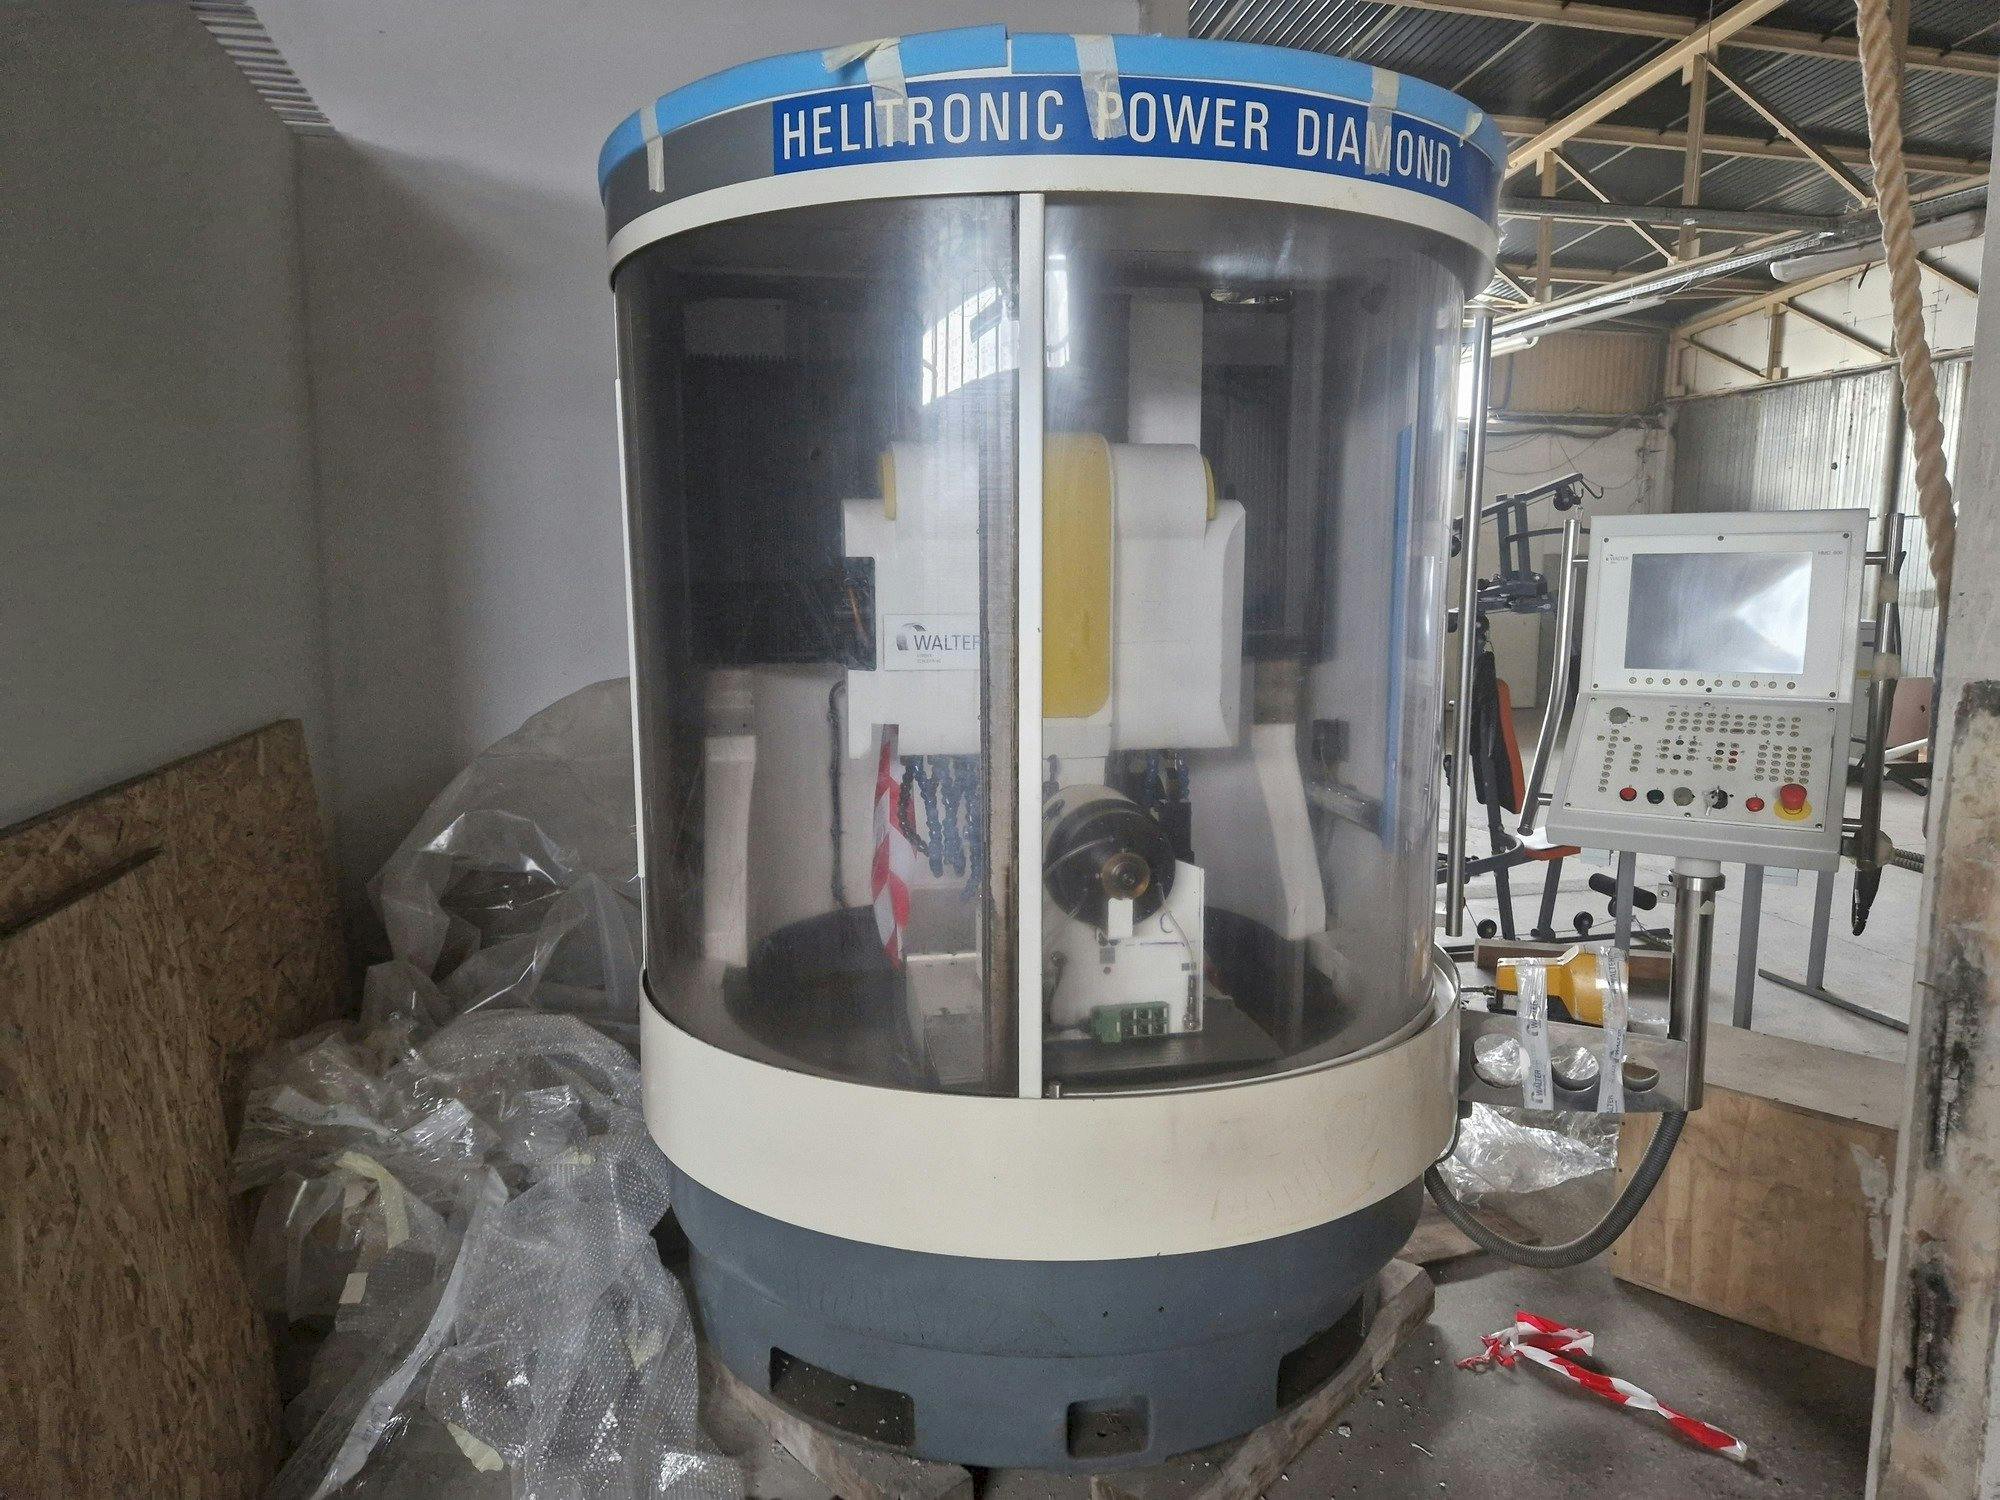 Front view of Walter Helitronic Power Diamond  machine